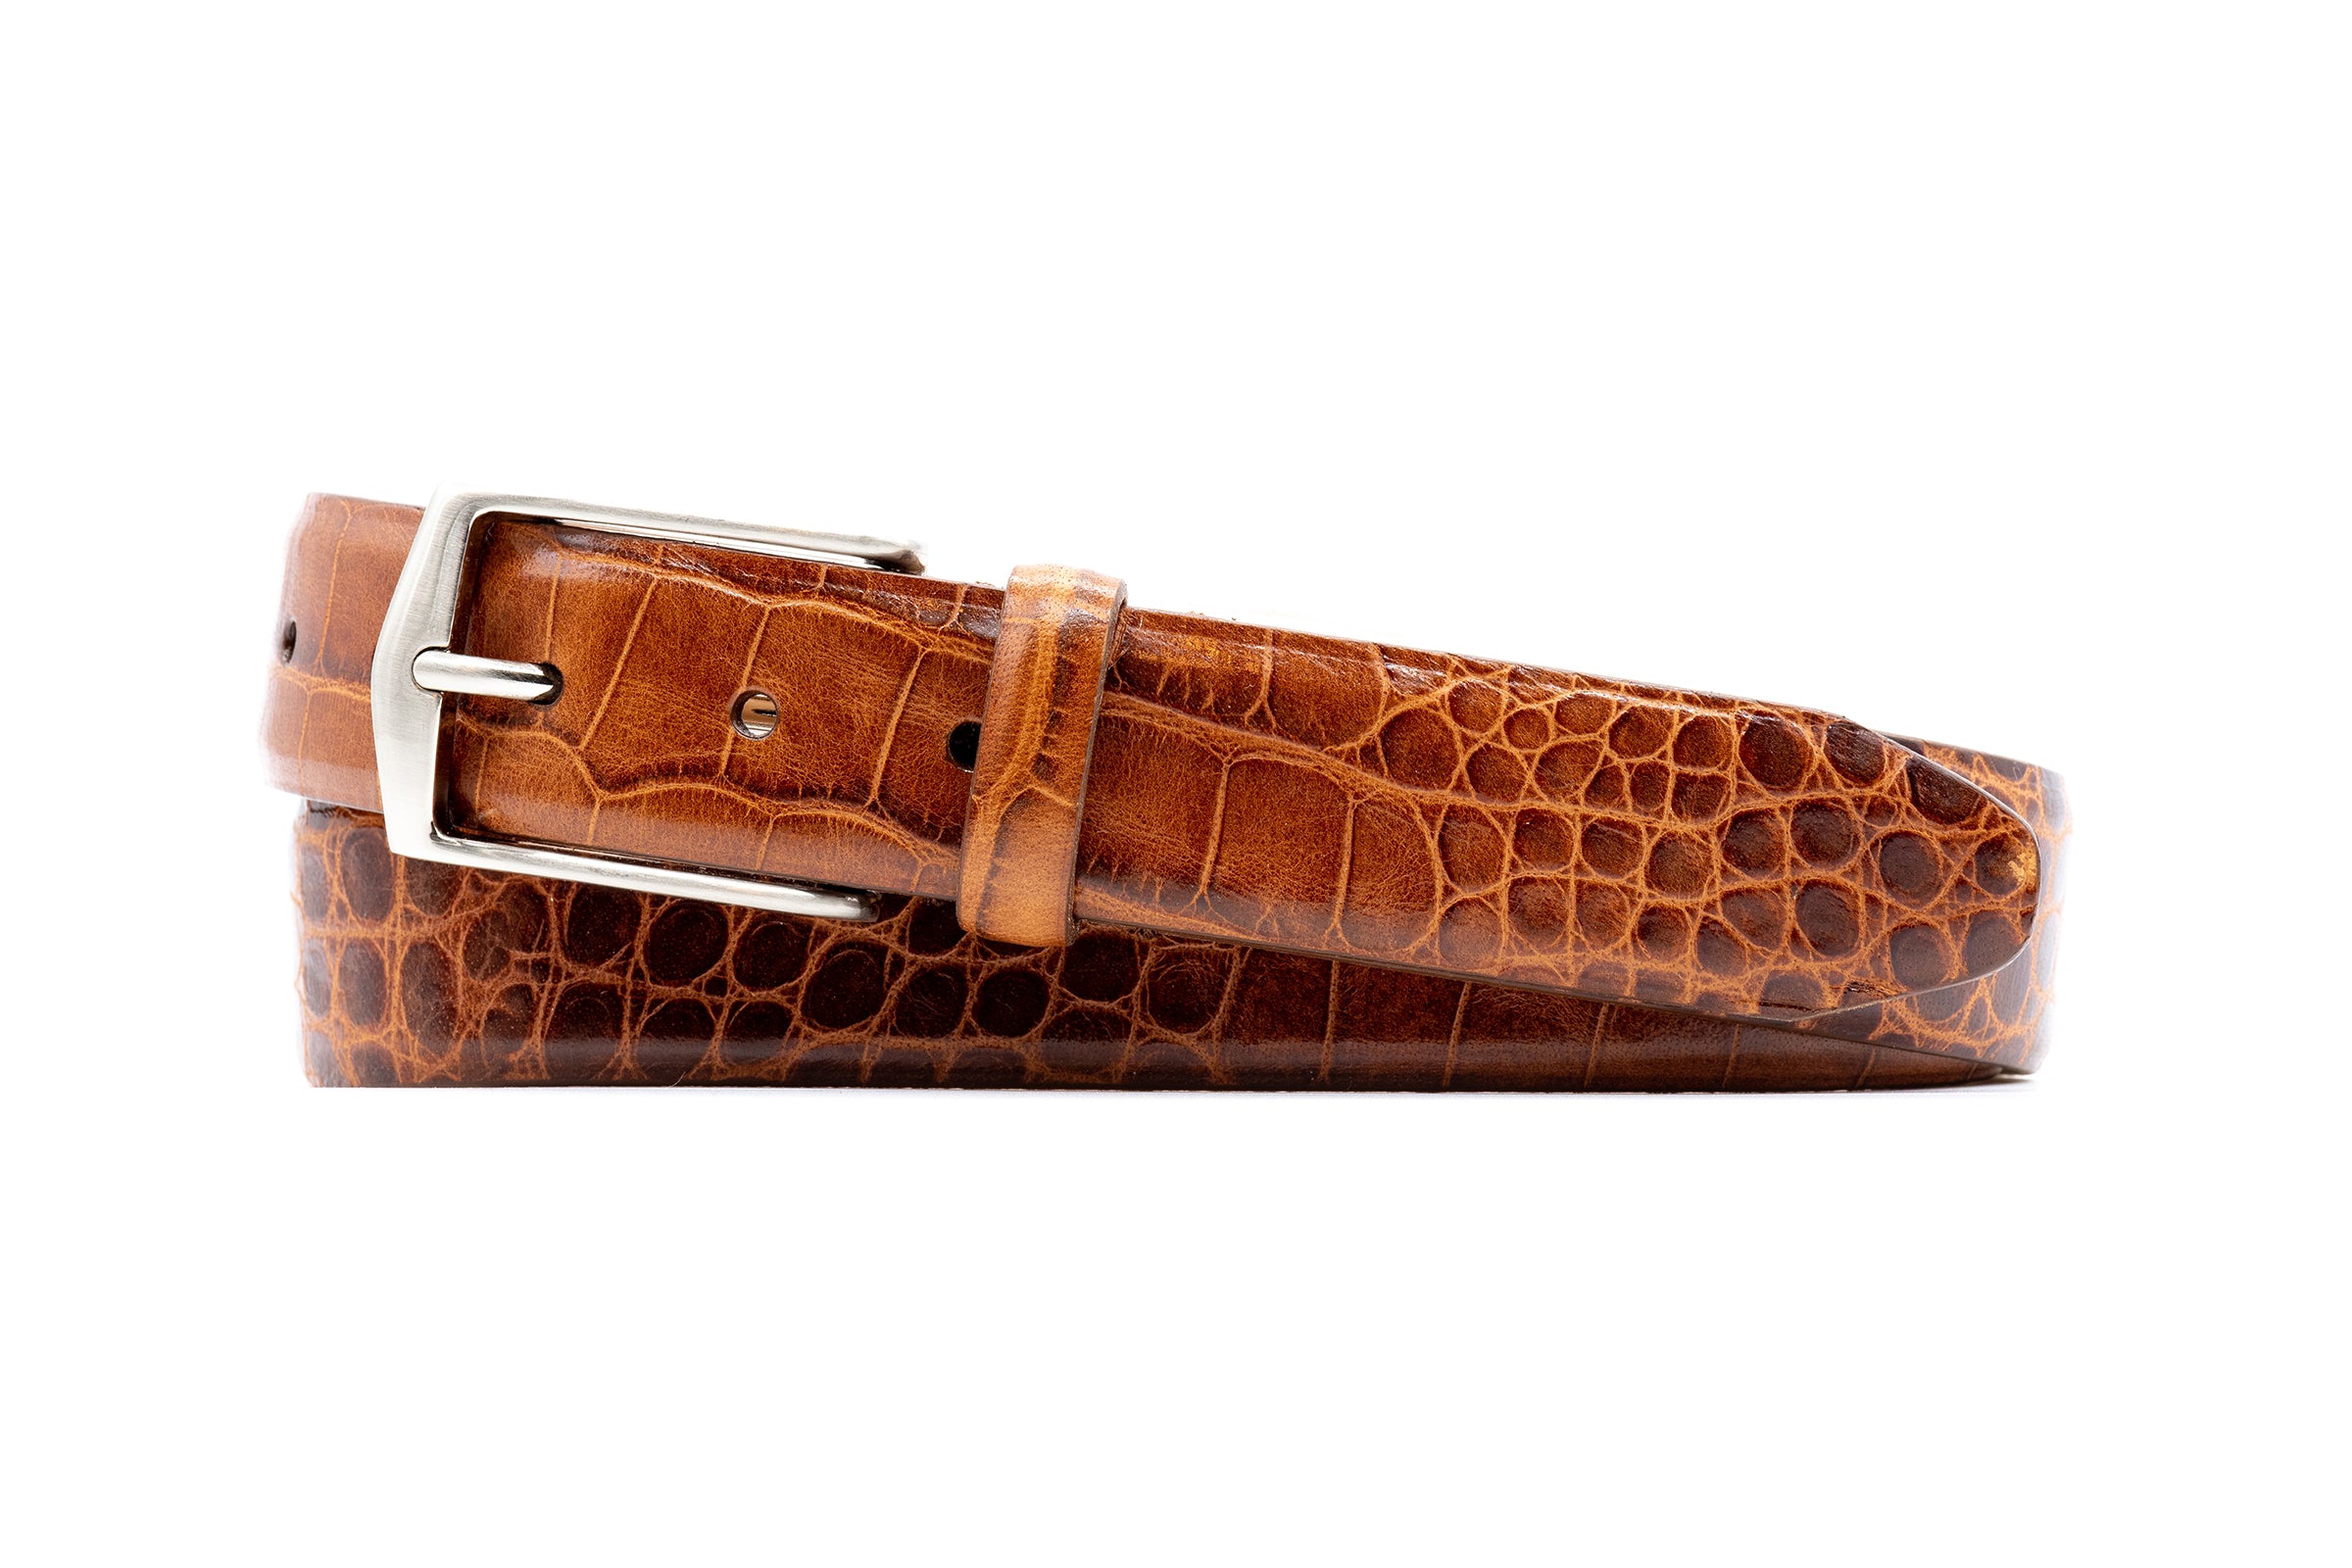 William 2 Buckle Alligator Grain Italian Calf Leather Belt - Chestnut